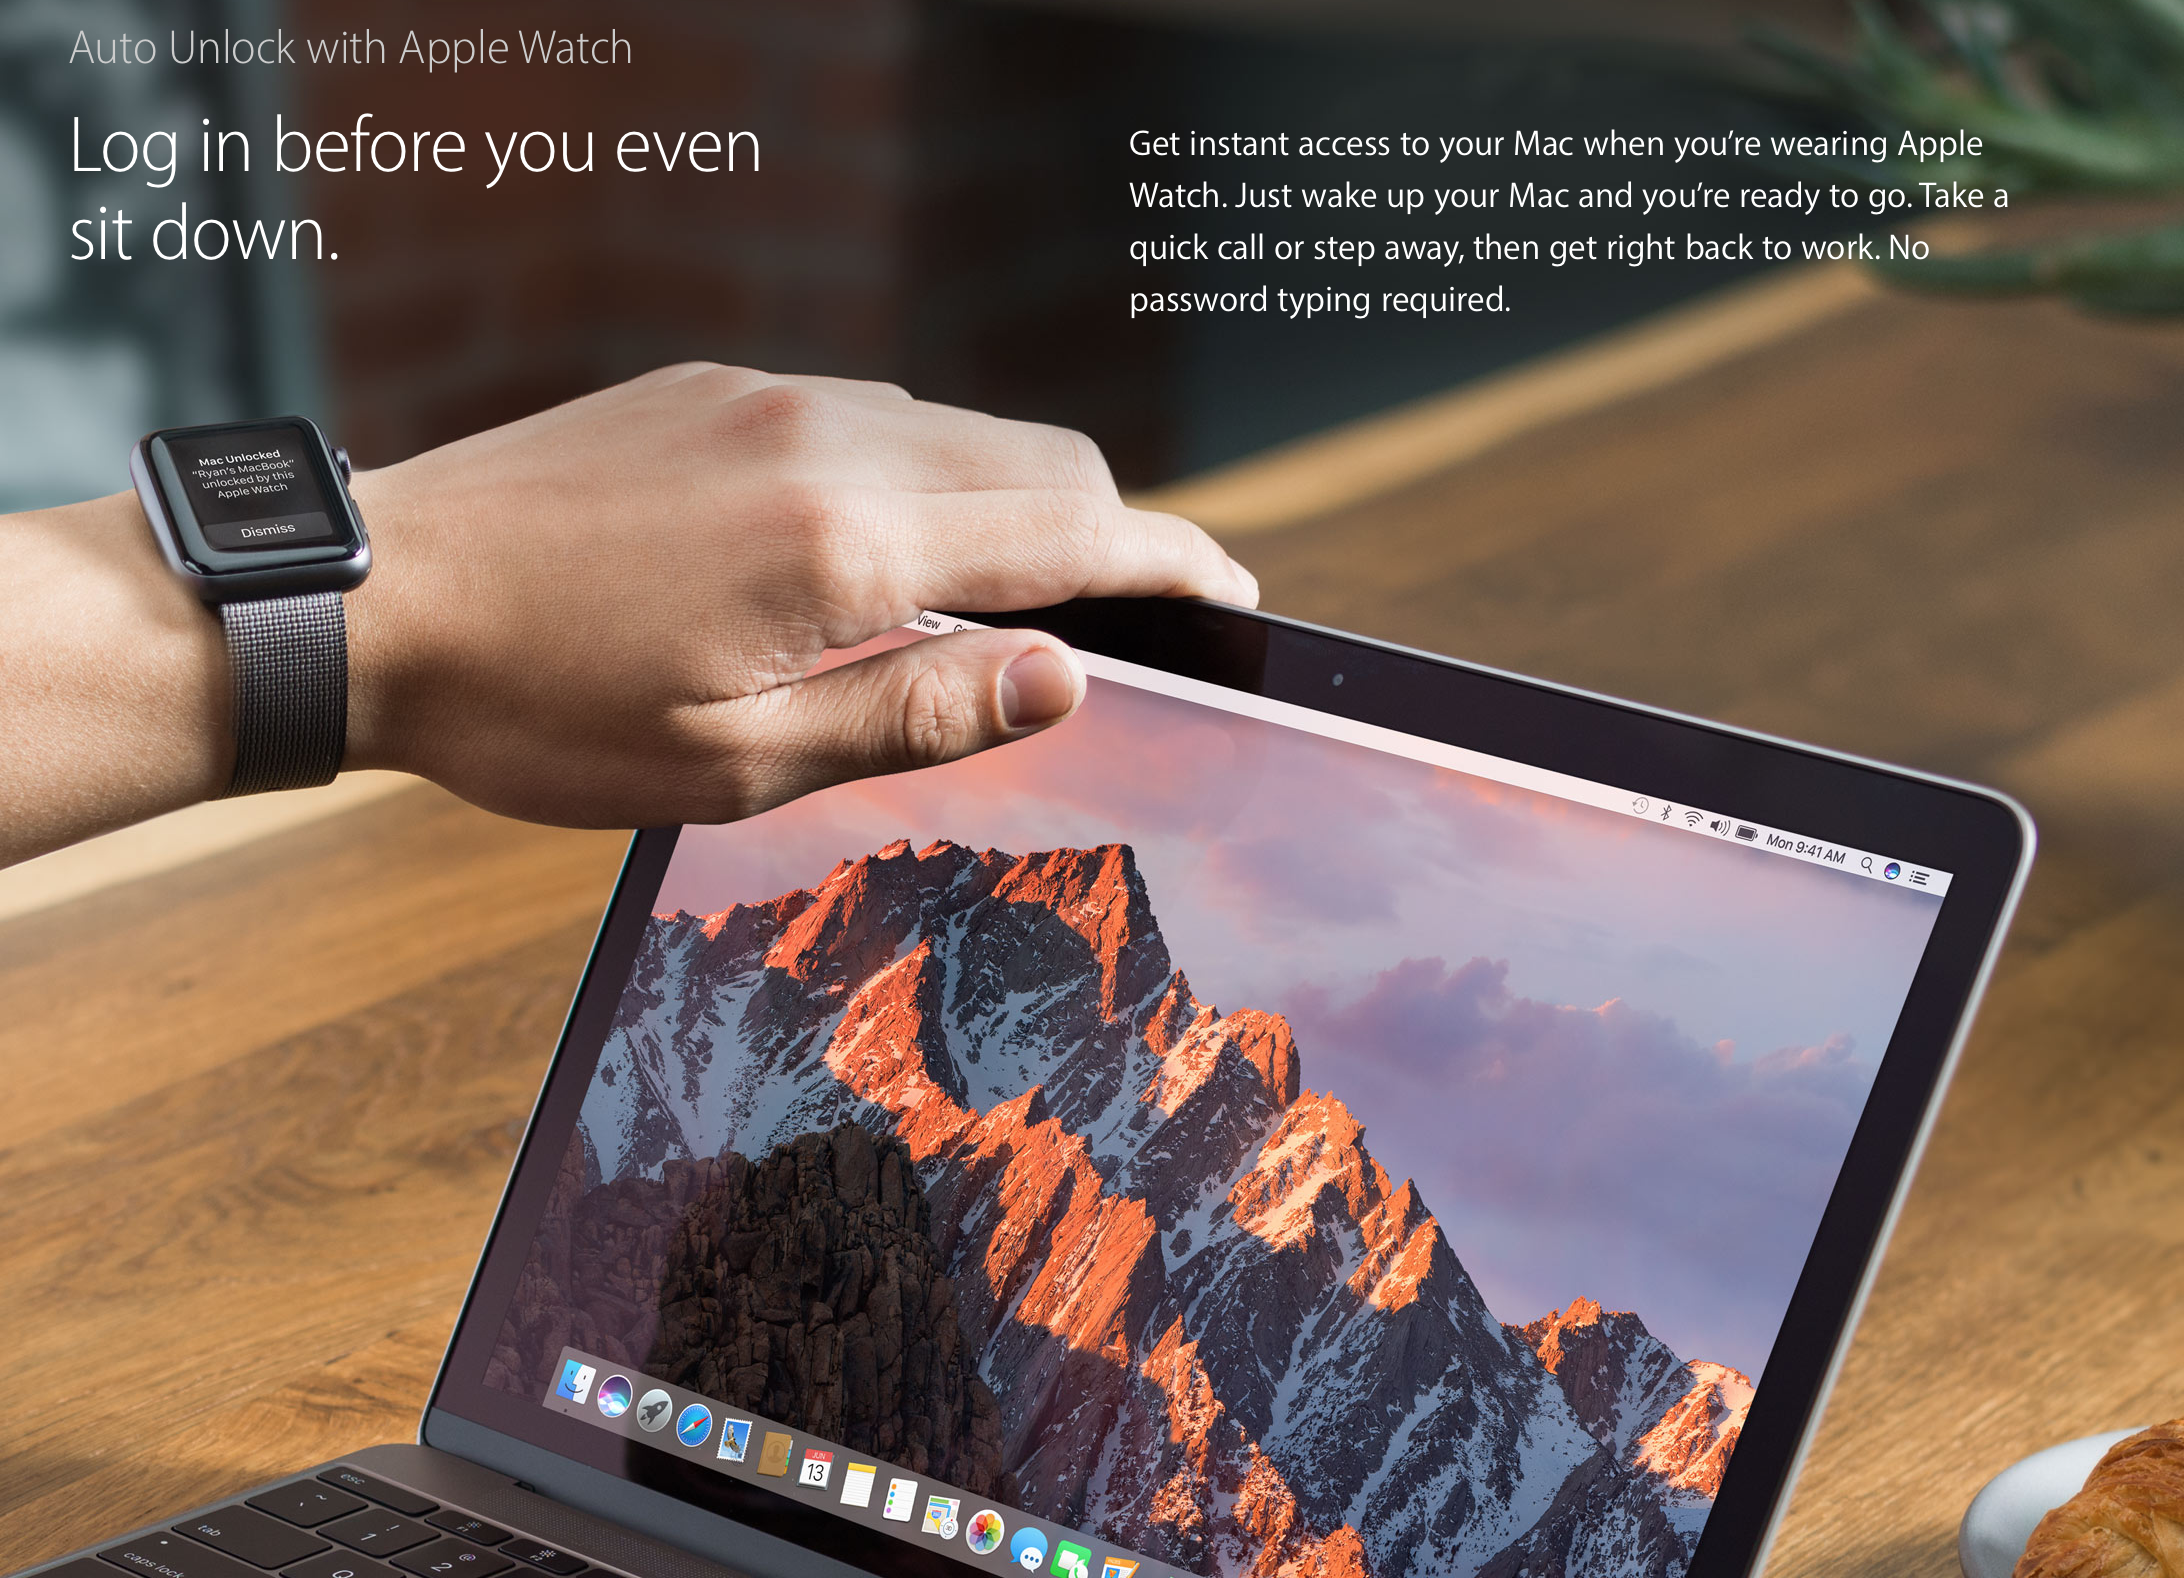 Auto Unlock Mac with Apple watch